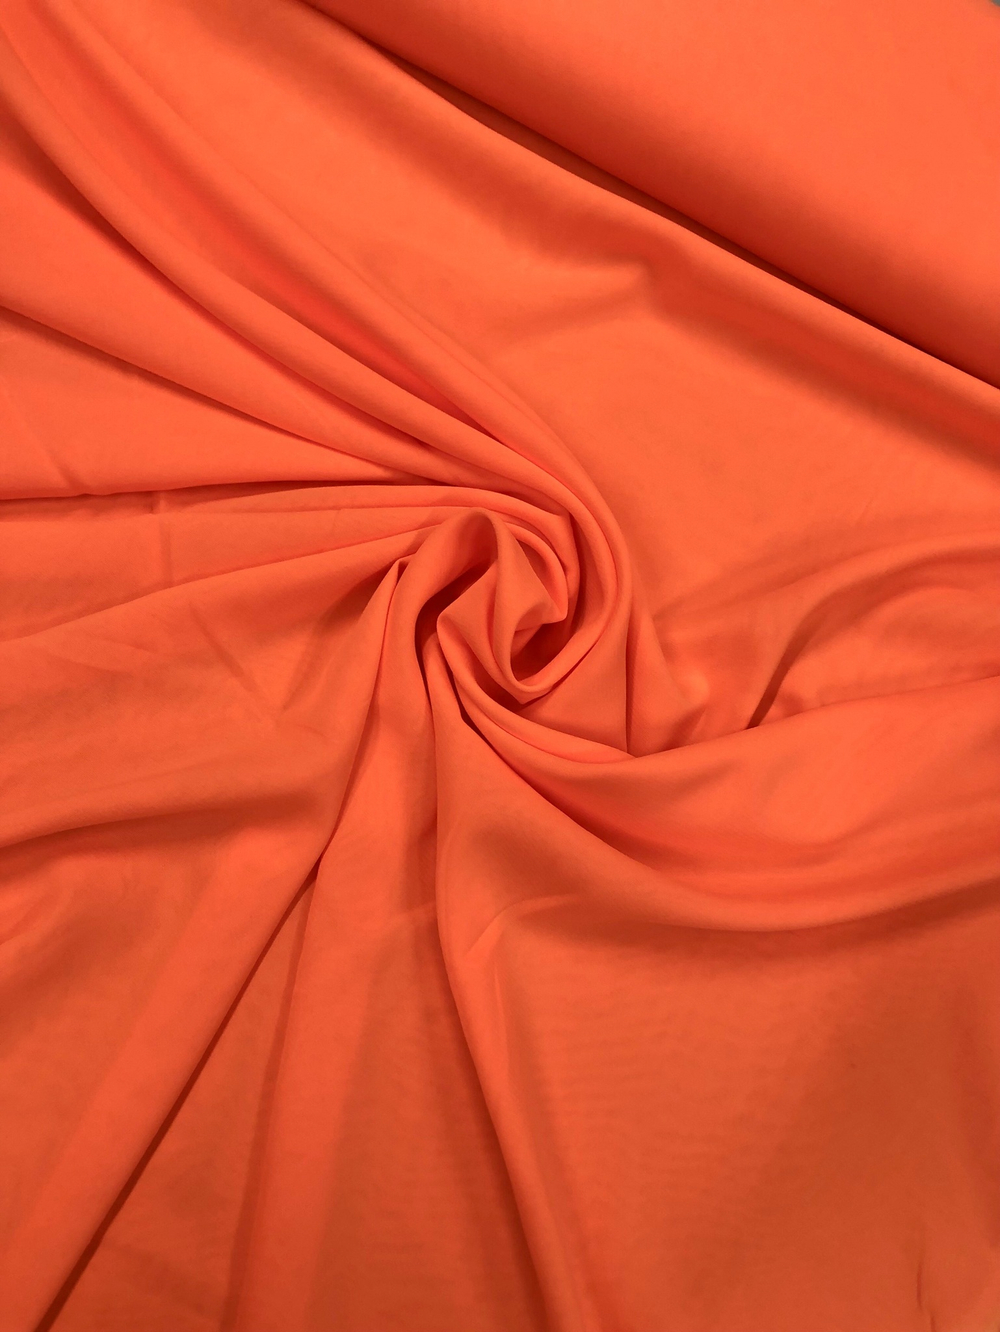 Ткань Шифон стрейч оранжевый яркий арт. 324692